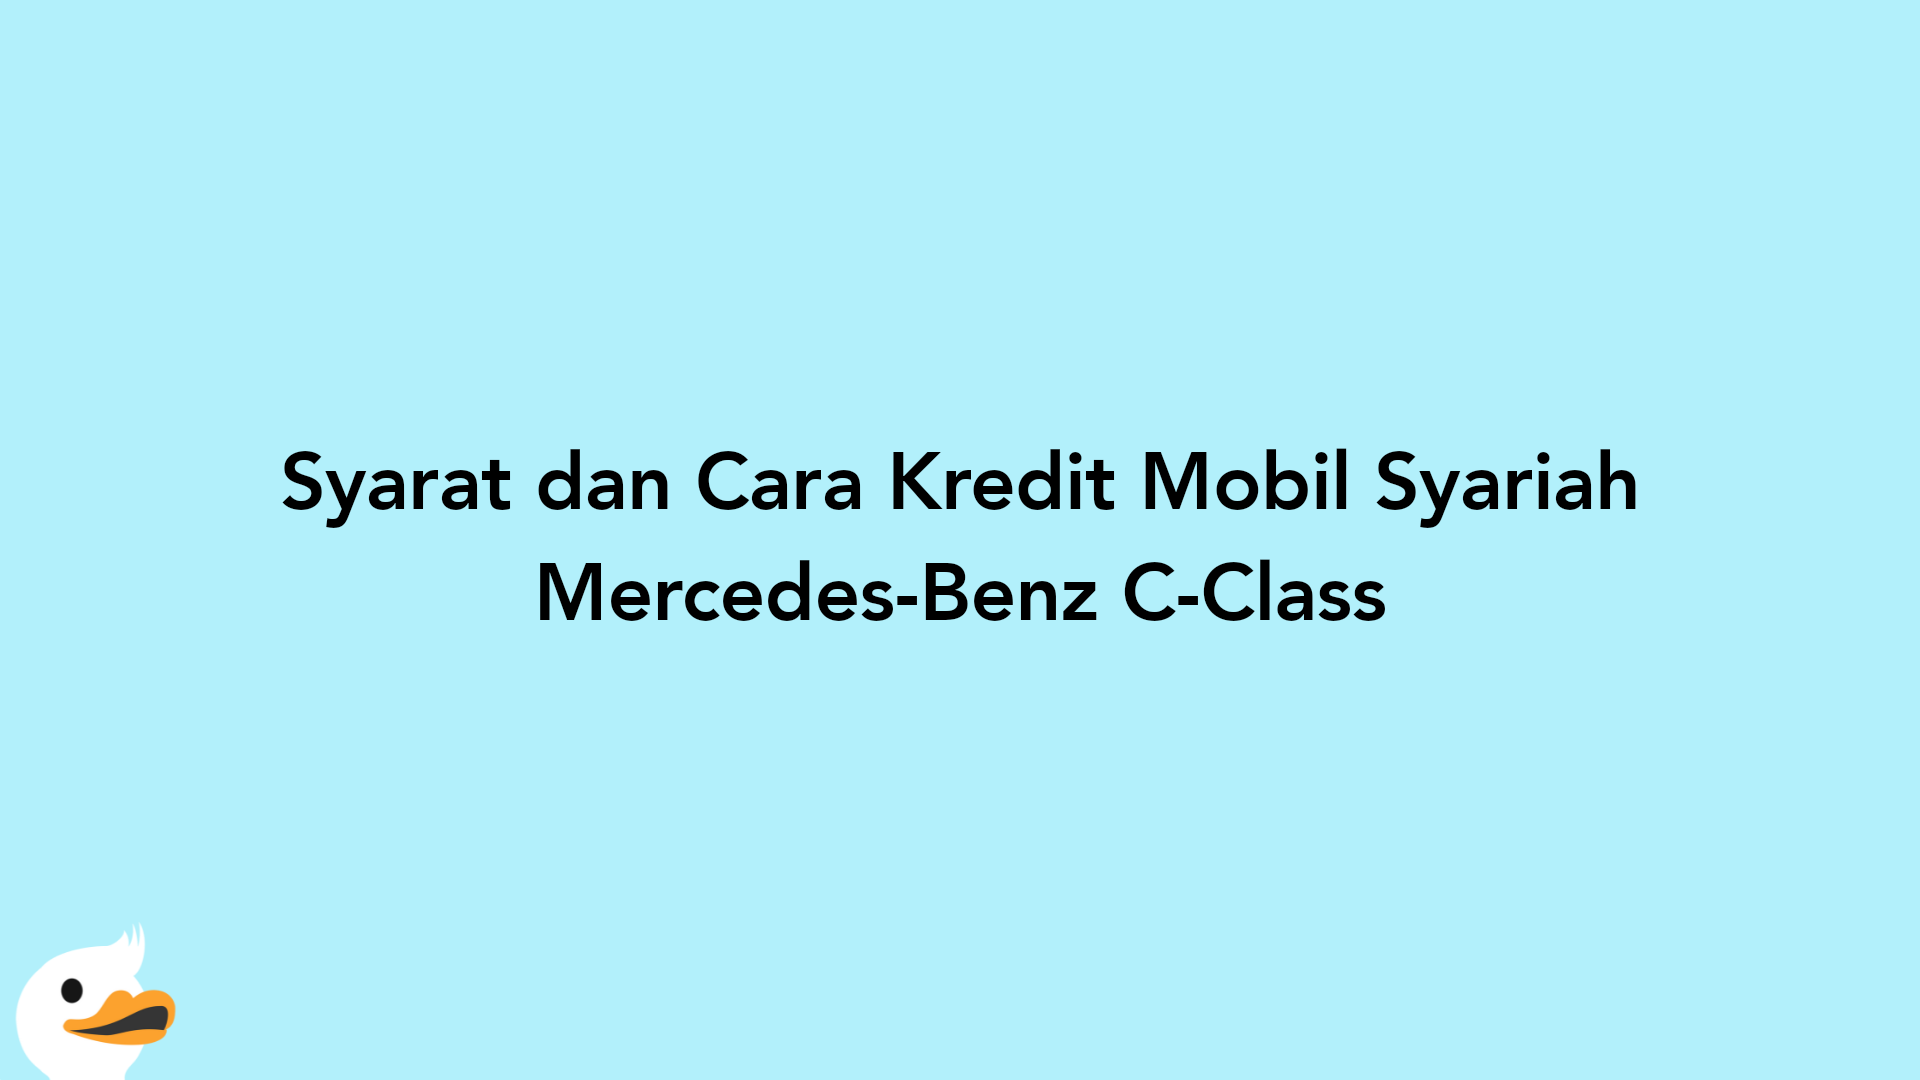 Syarat dan Cara Kredit Mobil Syariah Mercedes-Benz C-Class